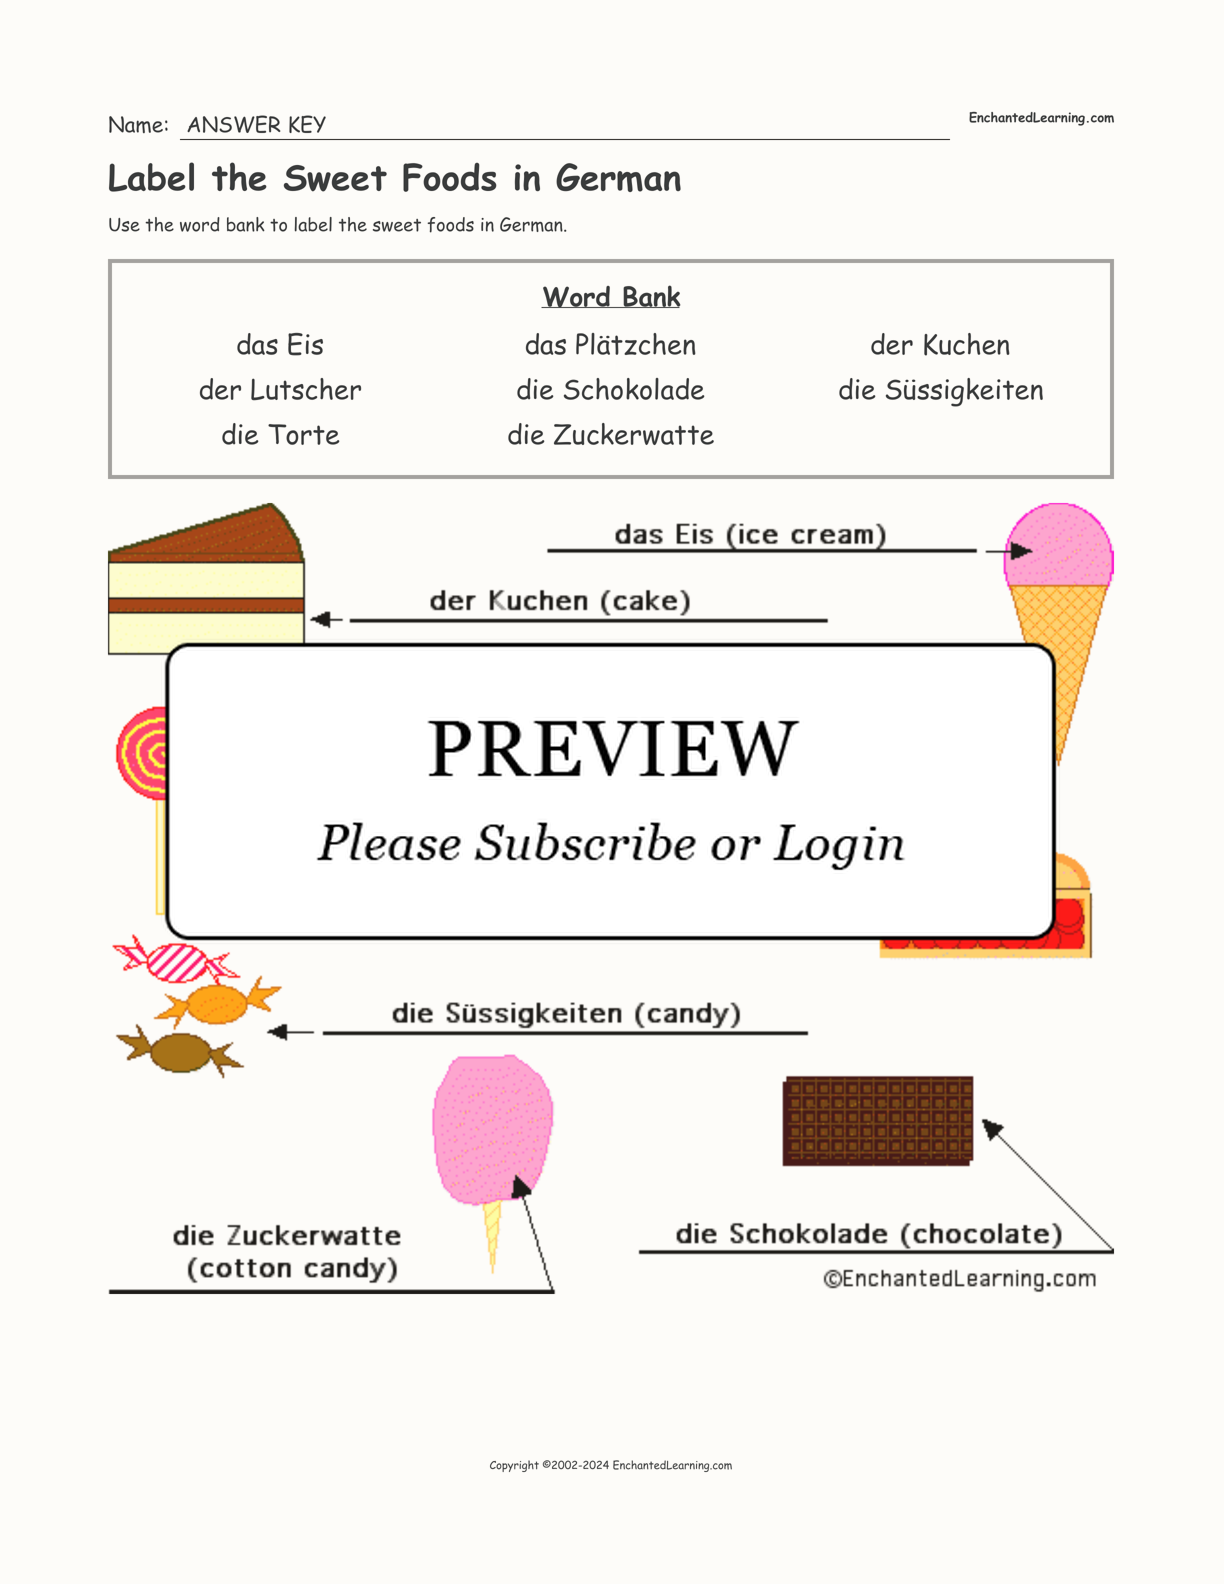 Label the Sweet Foods in German interactive worksheet page 2